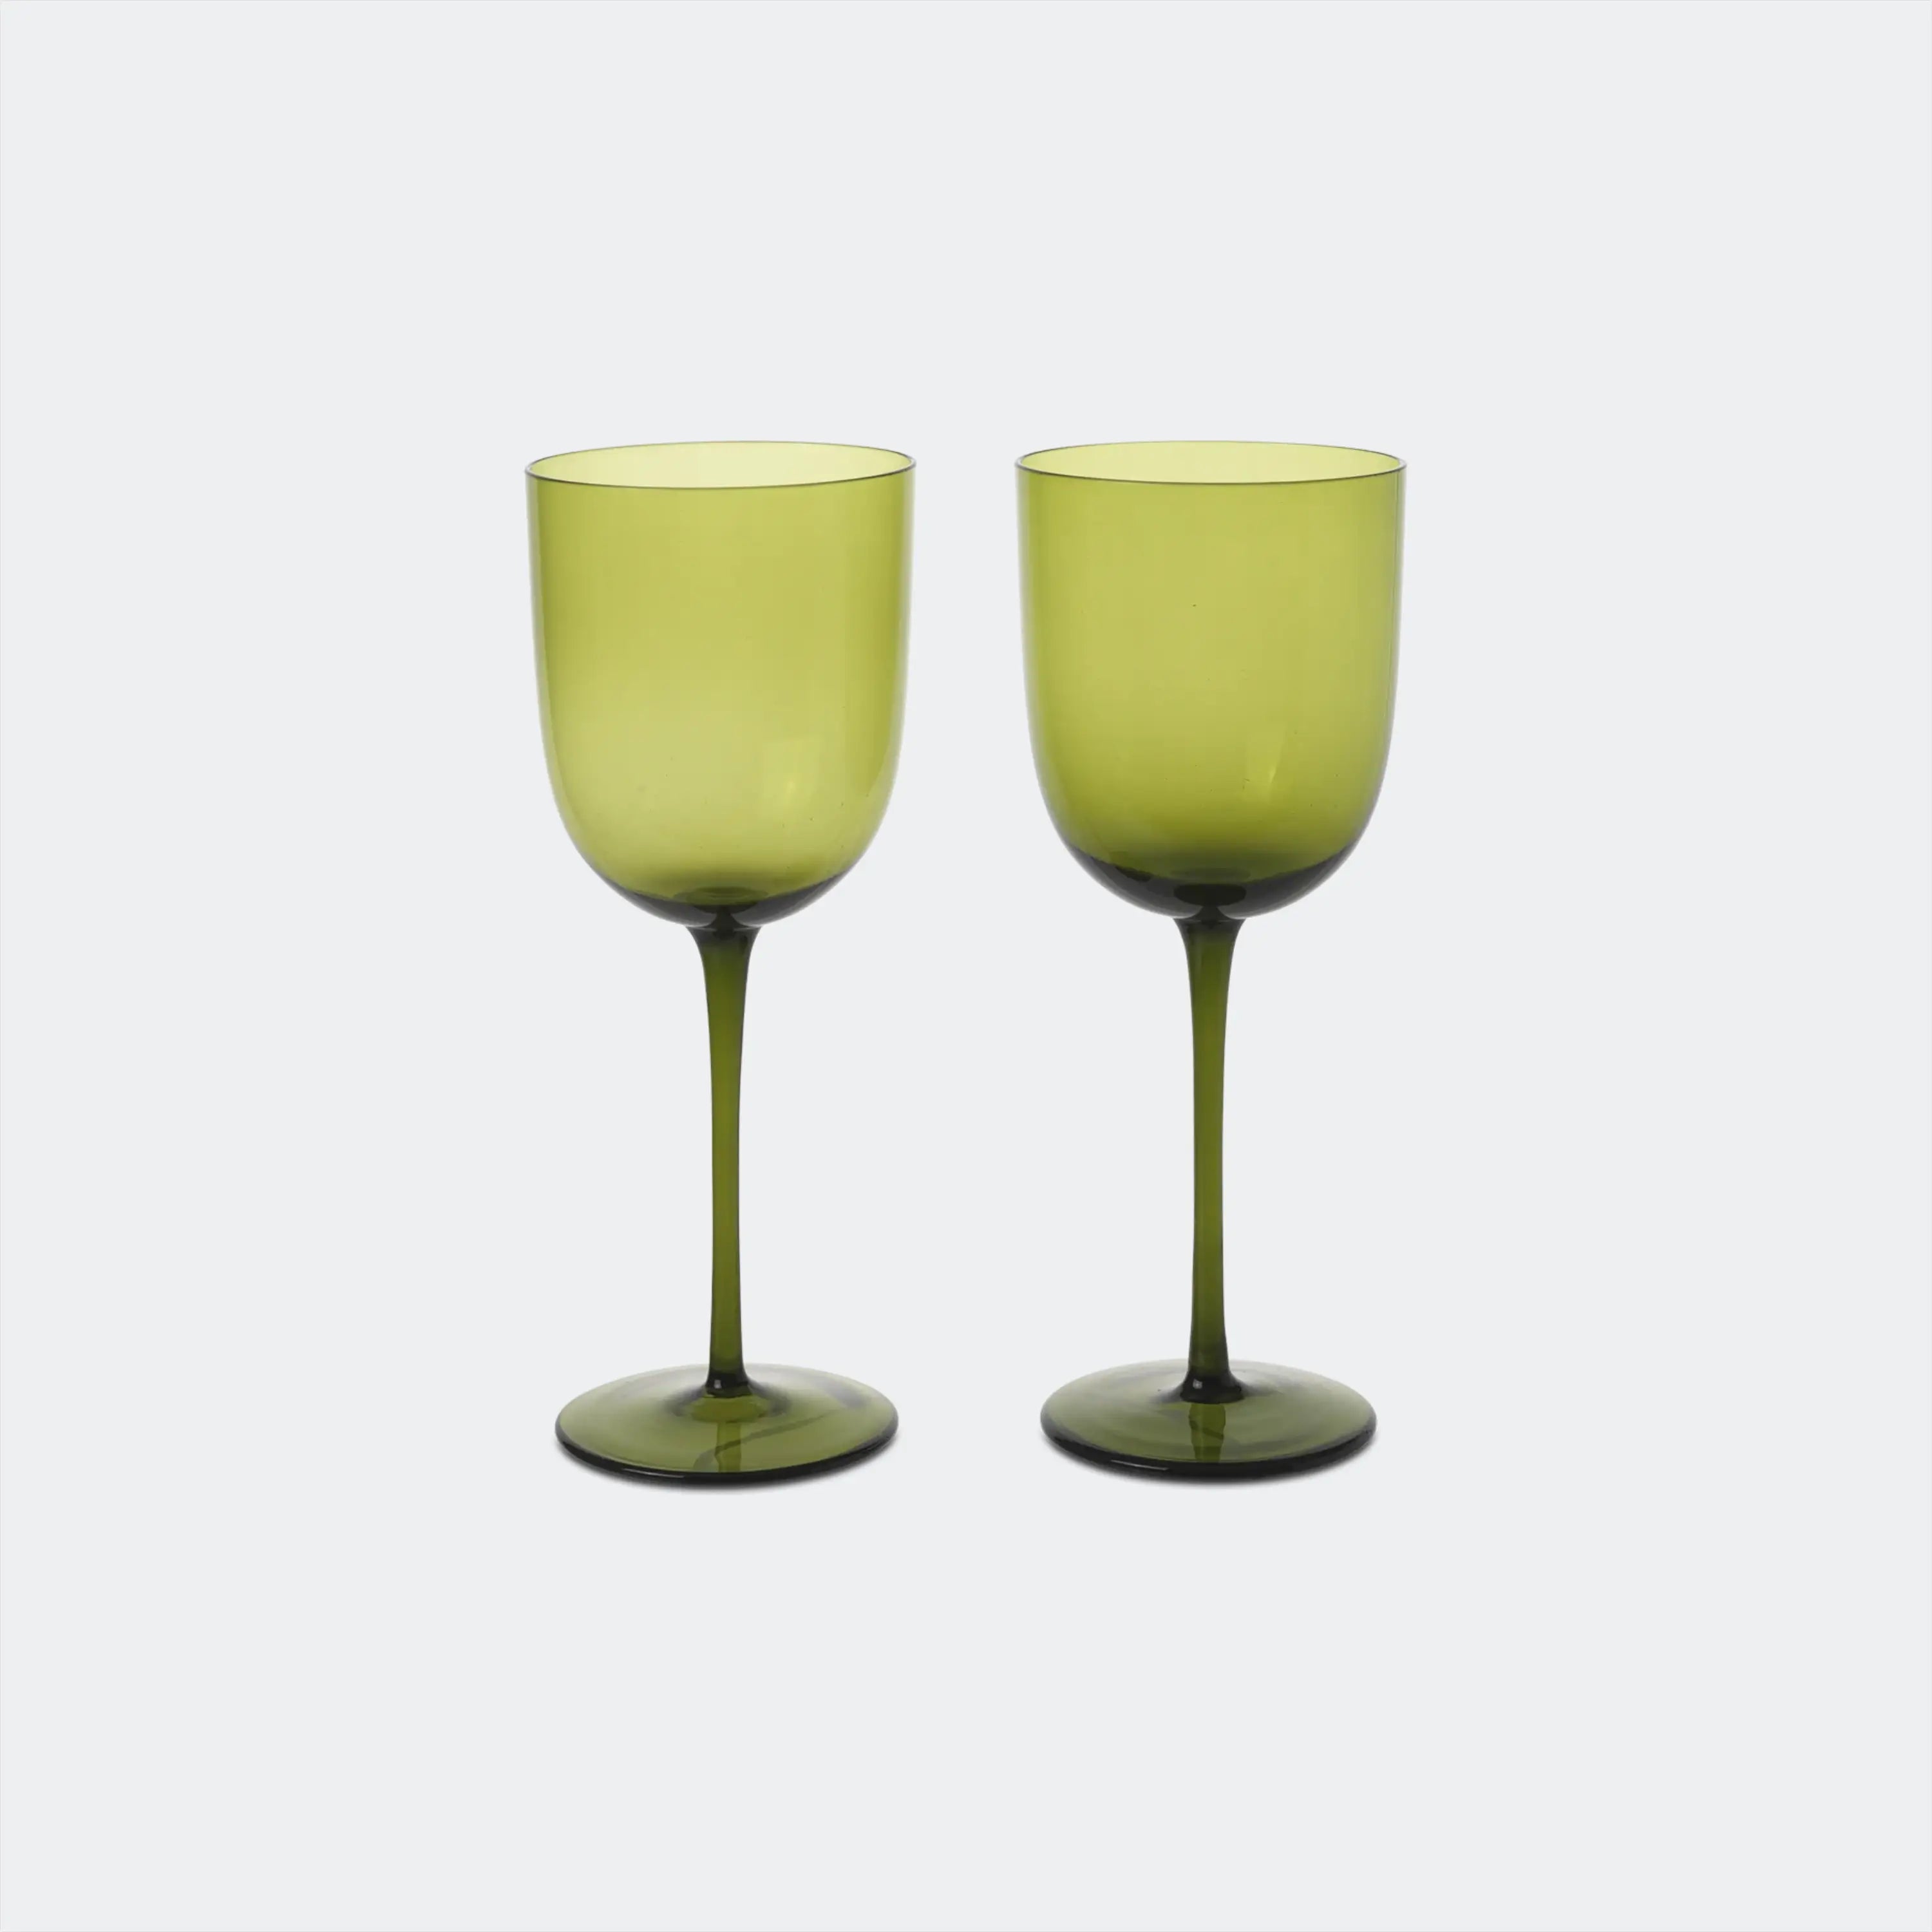 Ferm Living Host White Wine Glasses - Set of 2 Moss Green - KANSO#Color_Moss